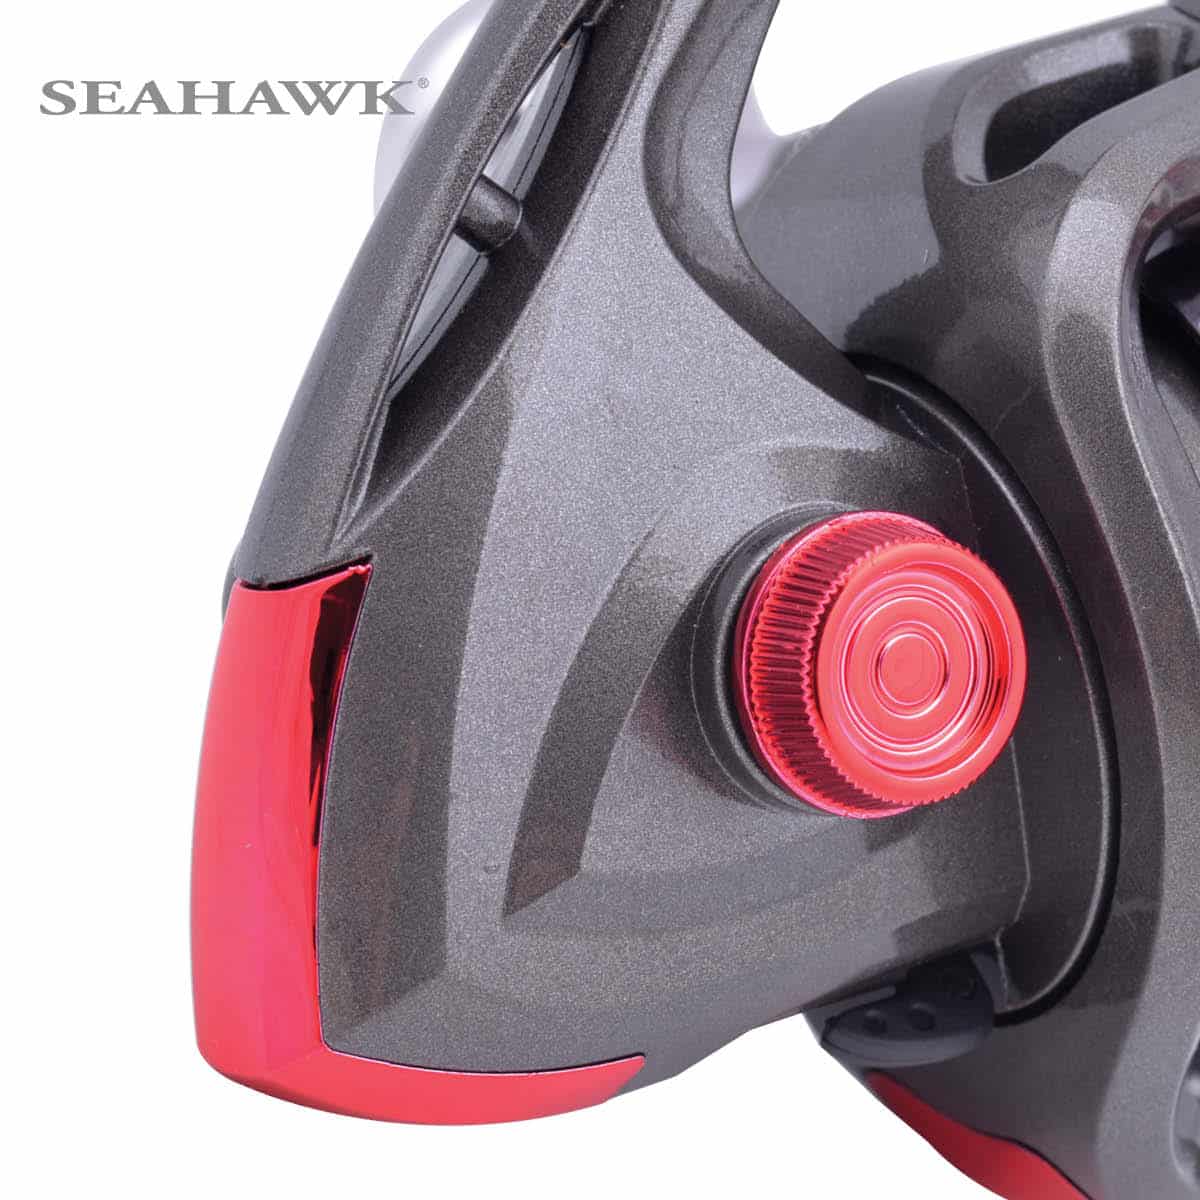 seahawk-holiday-3-hld-3-seahawk-6